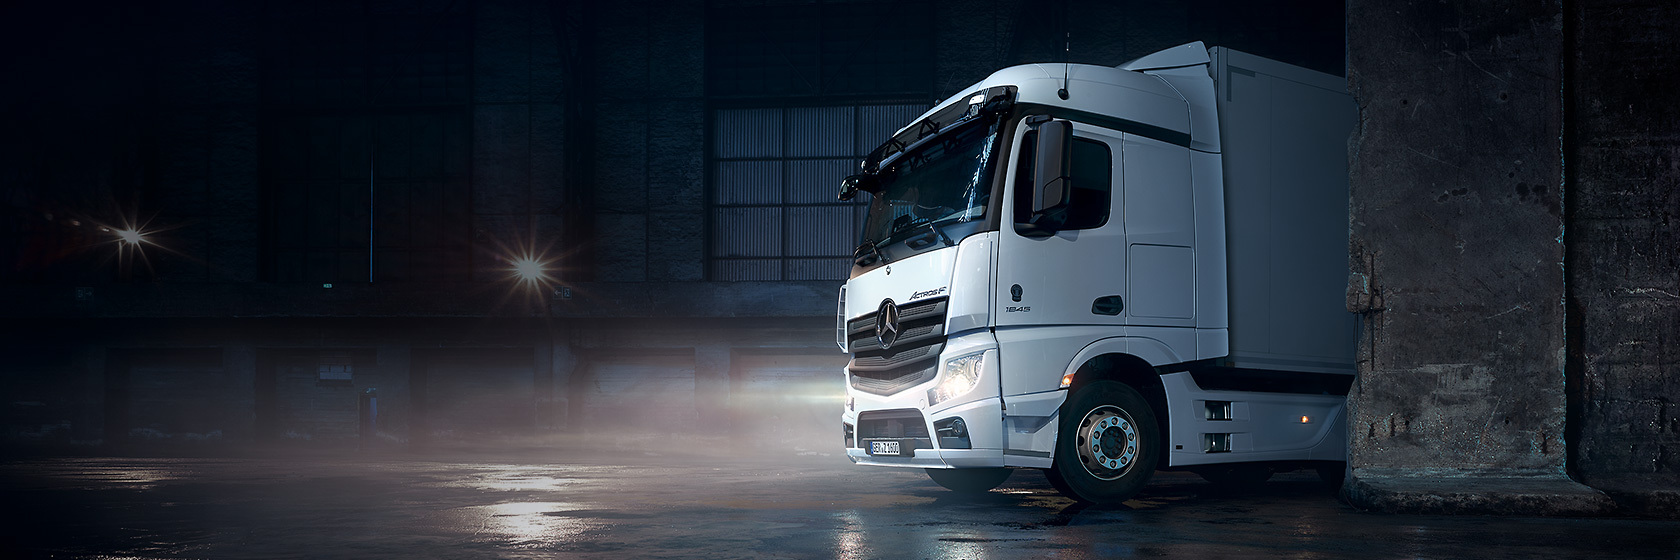 Daimler Truck Austria Gmbh - объявления о продаже undefined: фото 1